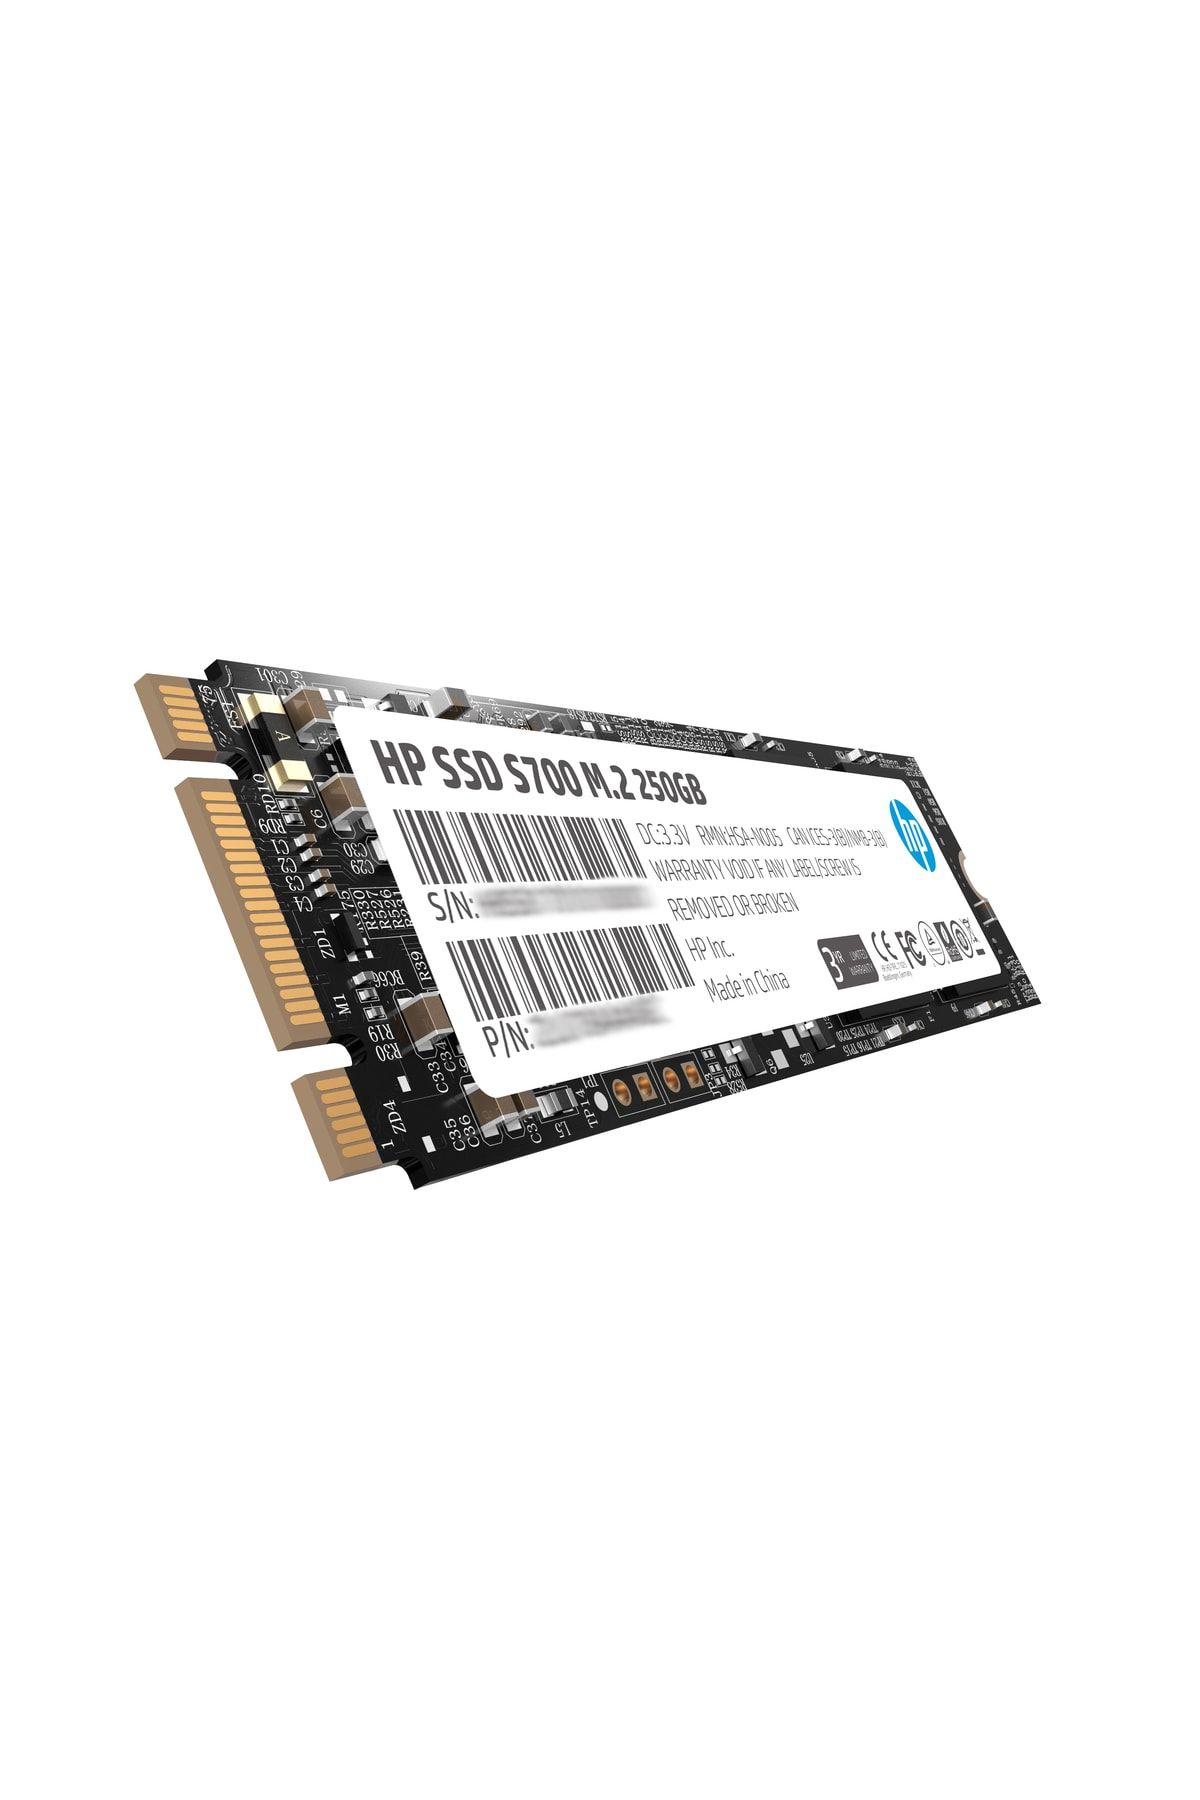 HP S700 250GB M.2 2280 SATA Dahili SSD Disk